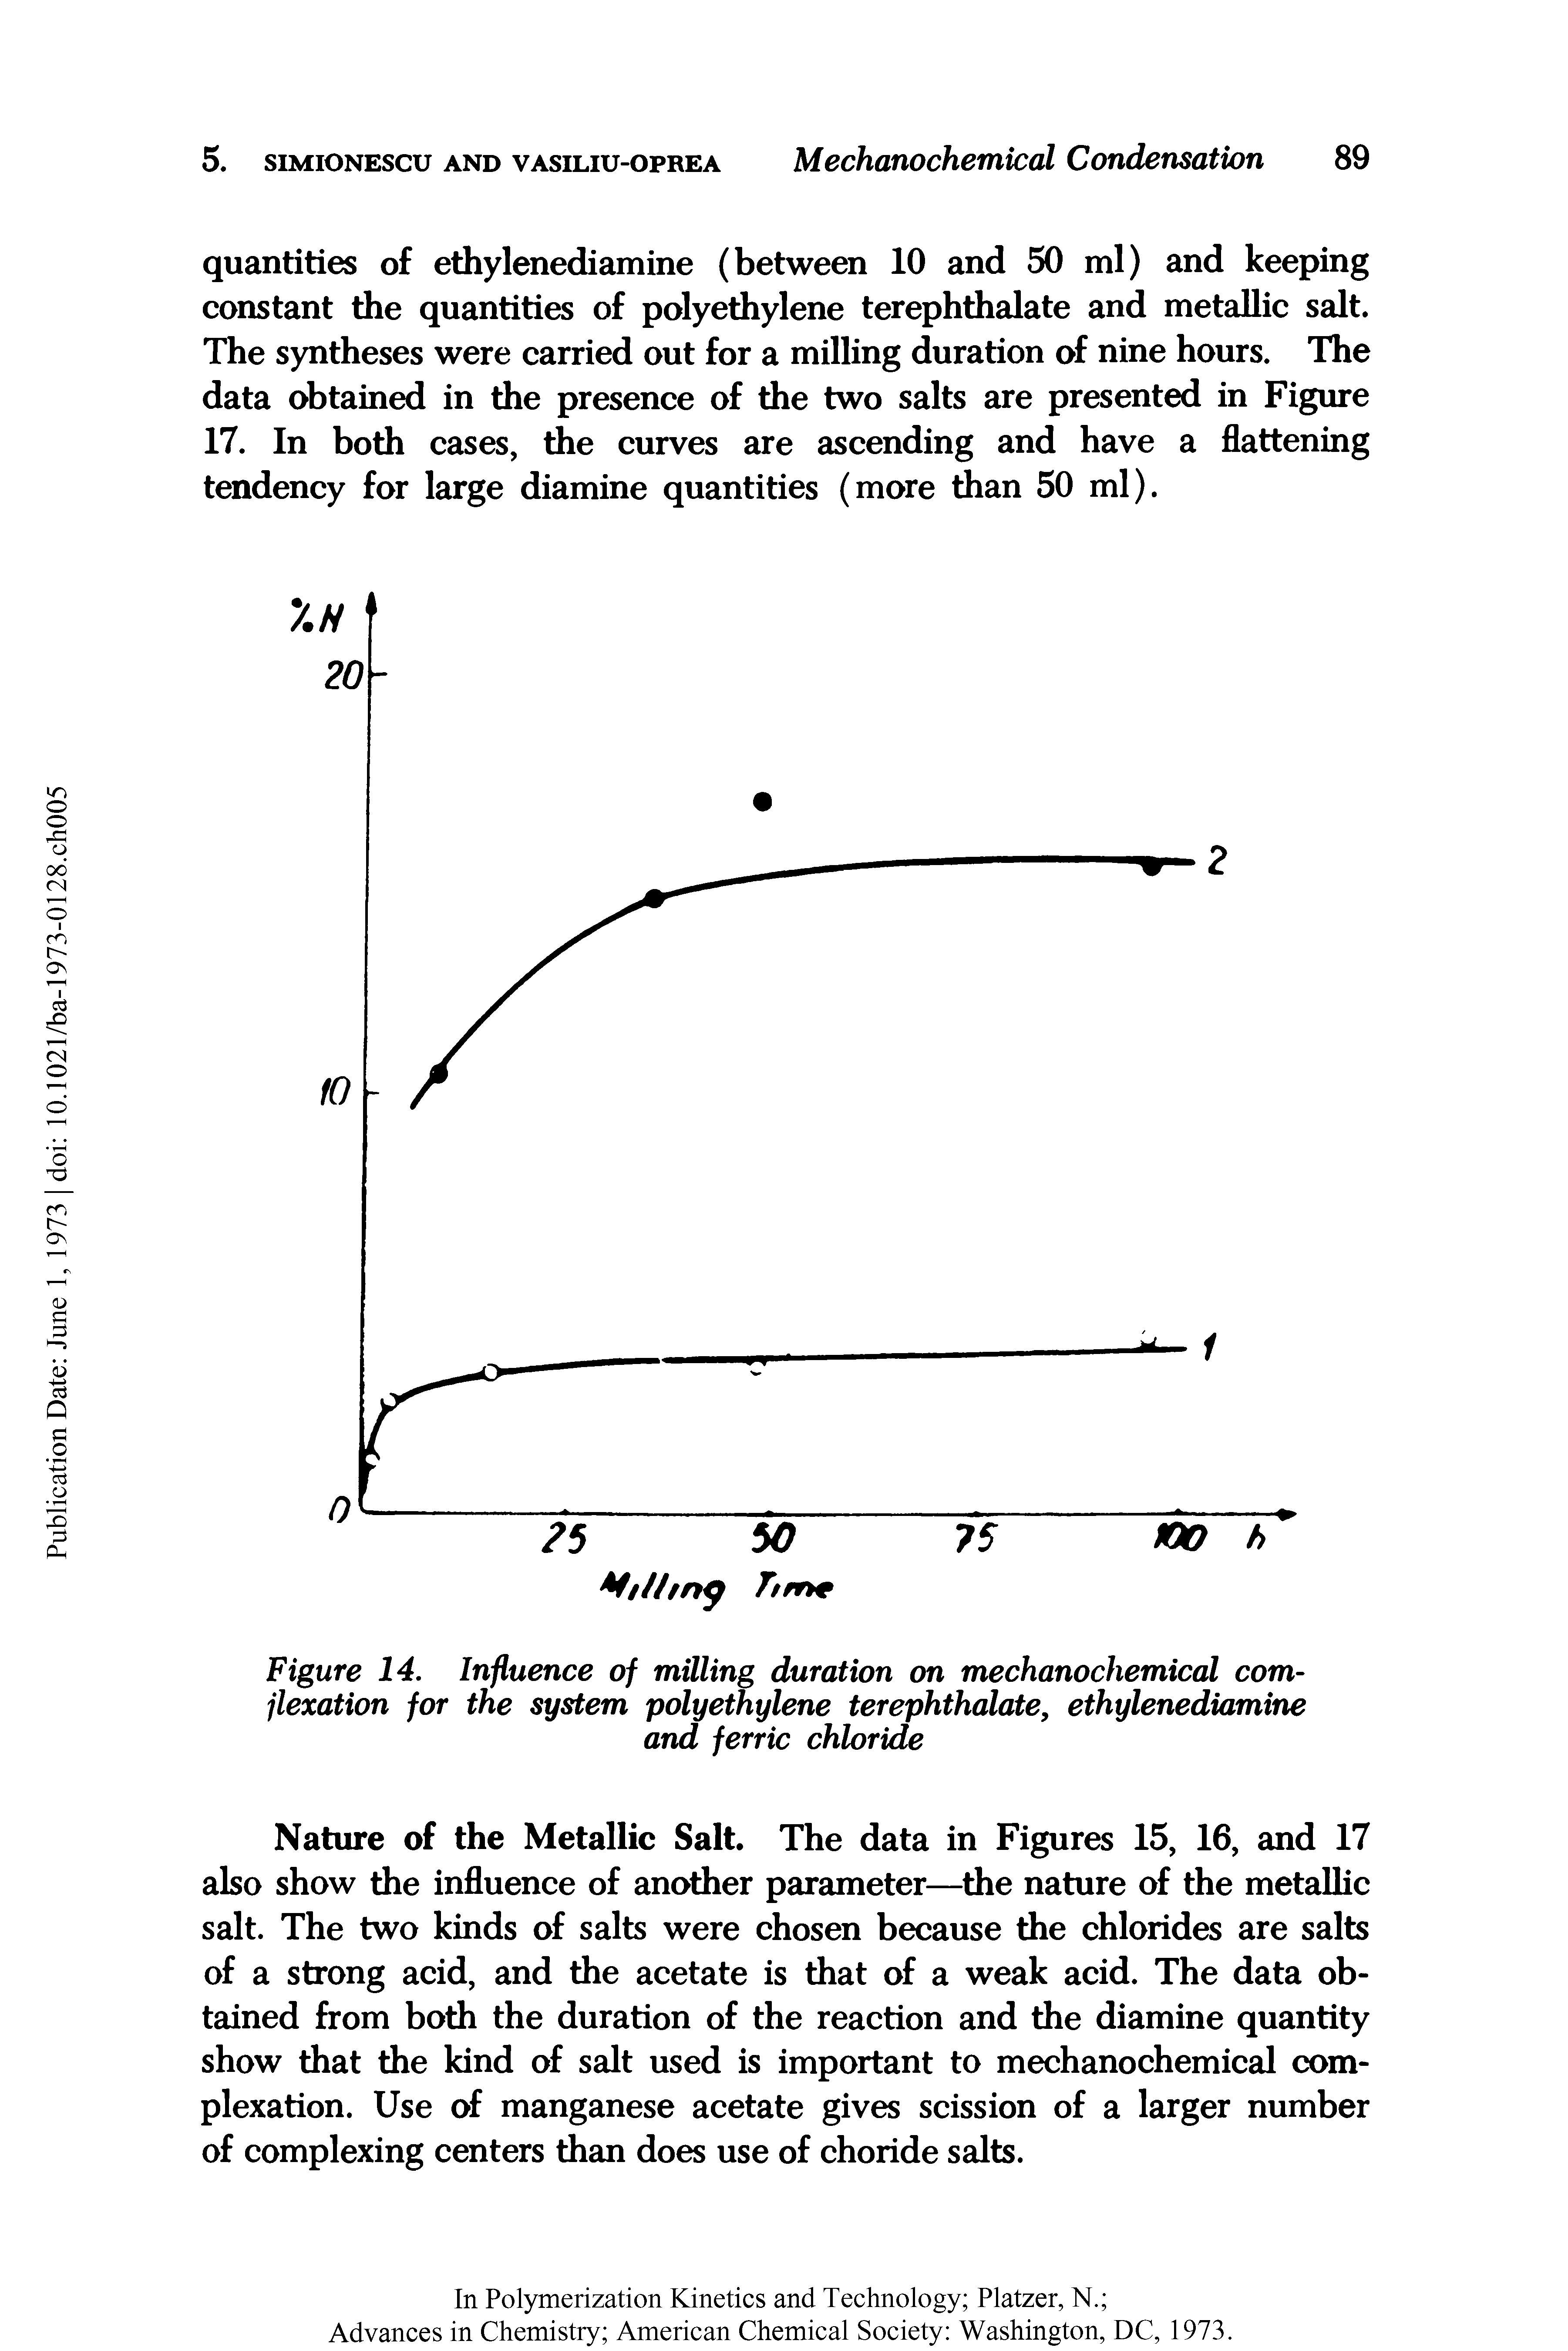 Figure 14. Influence of milling duration on mechanochemical com-jlexation for the system polyethylene terephthalate, ethylenediamine and ferric chloride...